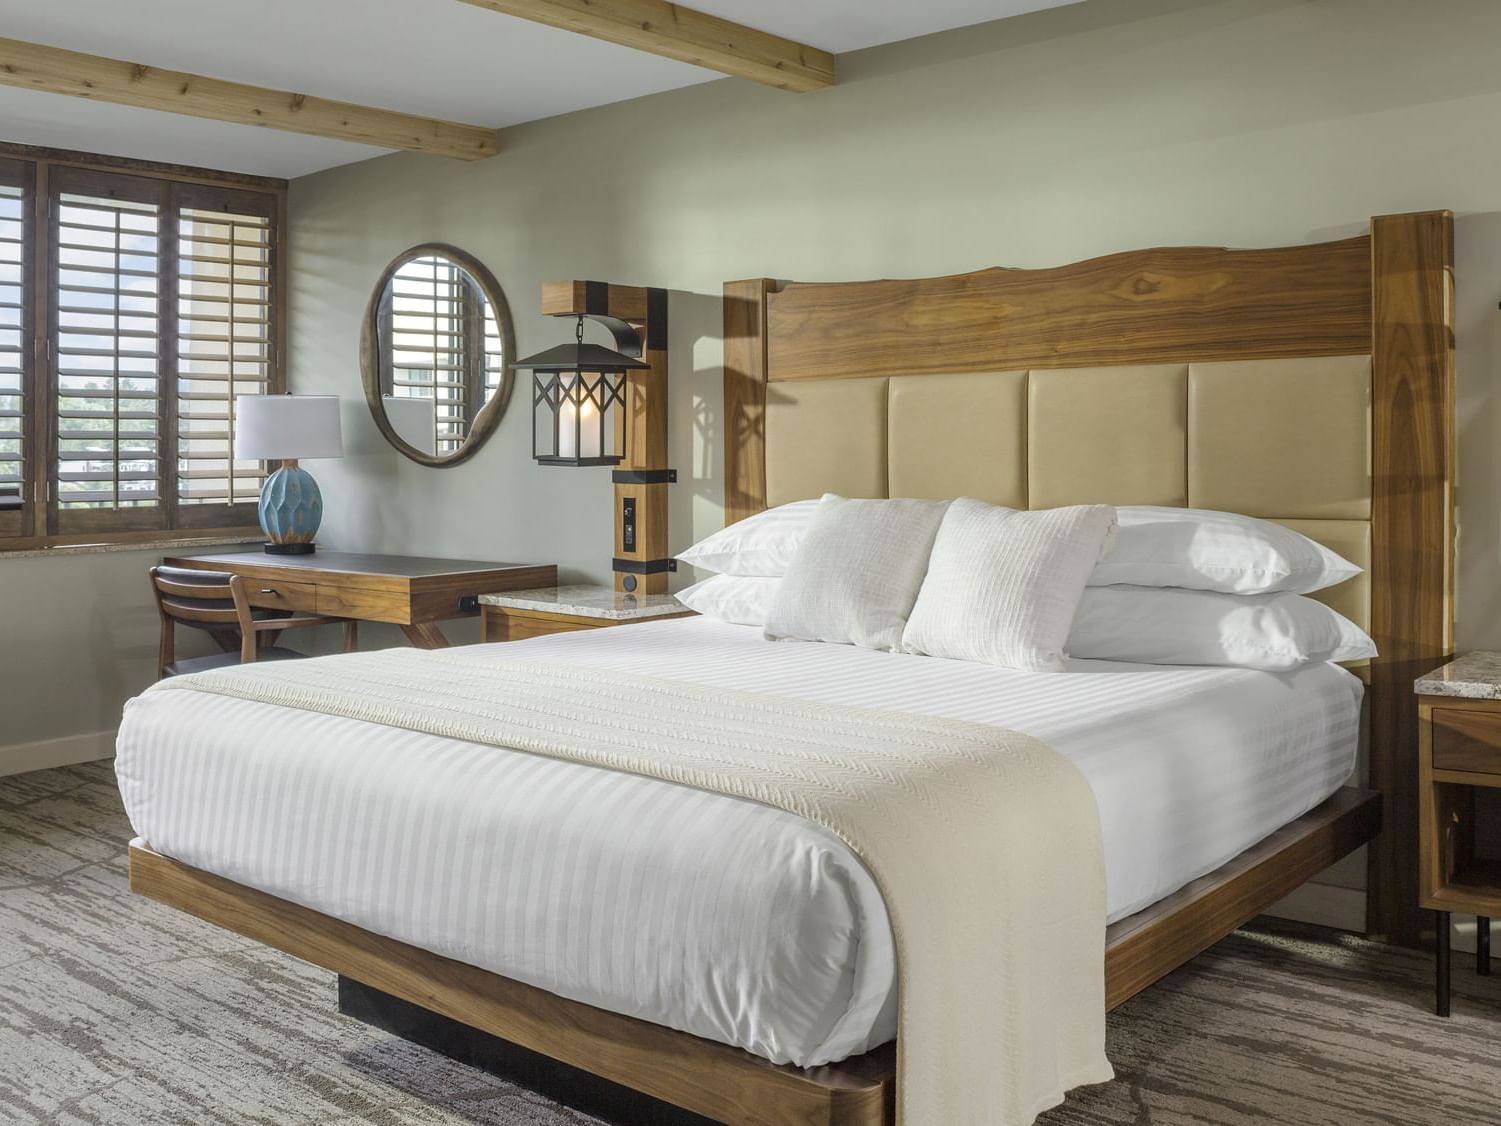 Resort Suite Bedroom with a king bed, lamp & desk at High Peaks Resort